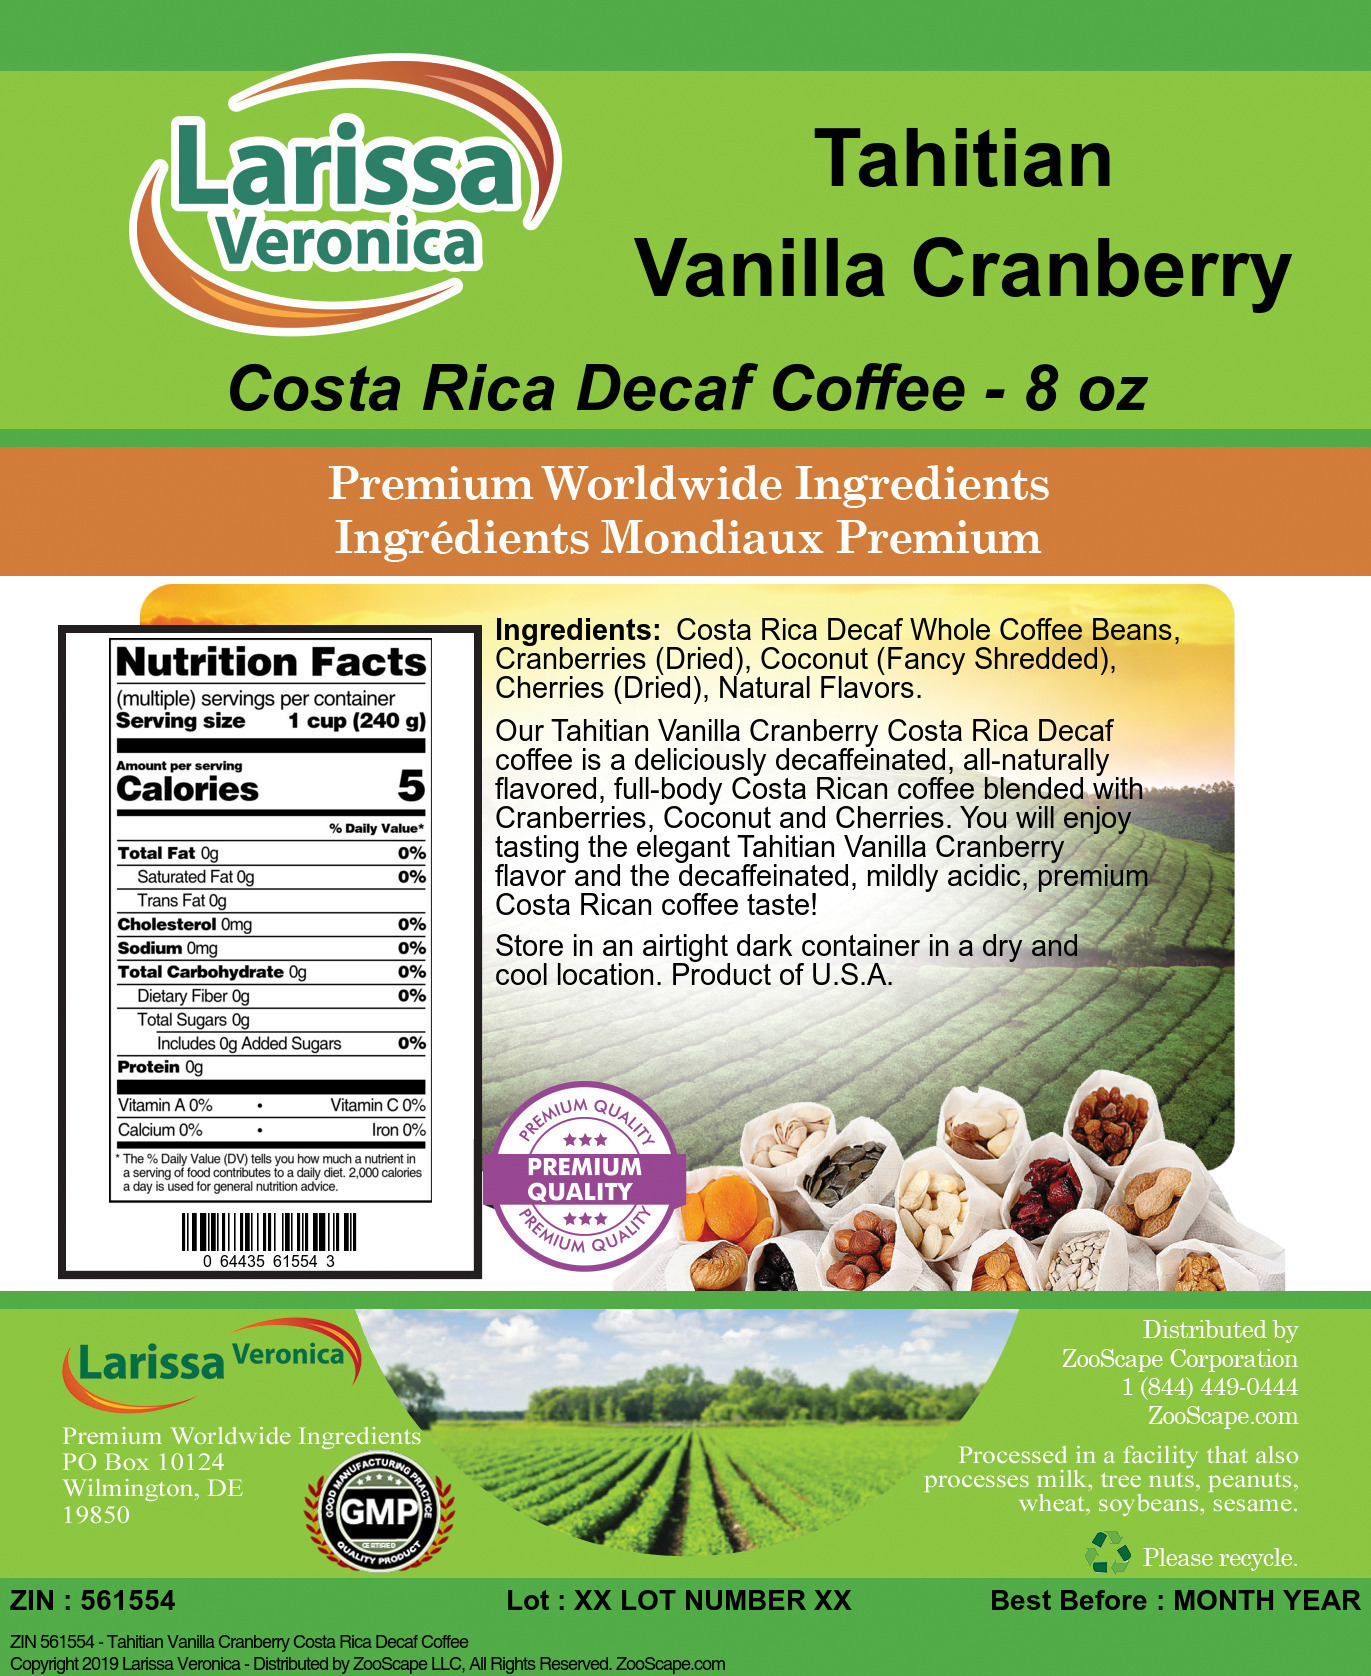 Tahitian Vanilla Cranberry Costa Rica Decaf Coffee - Label